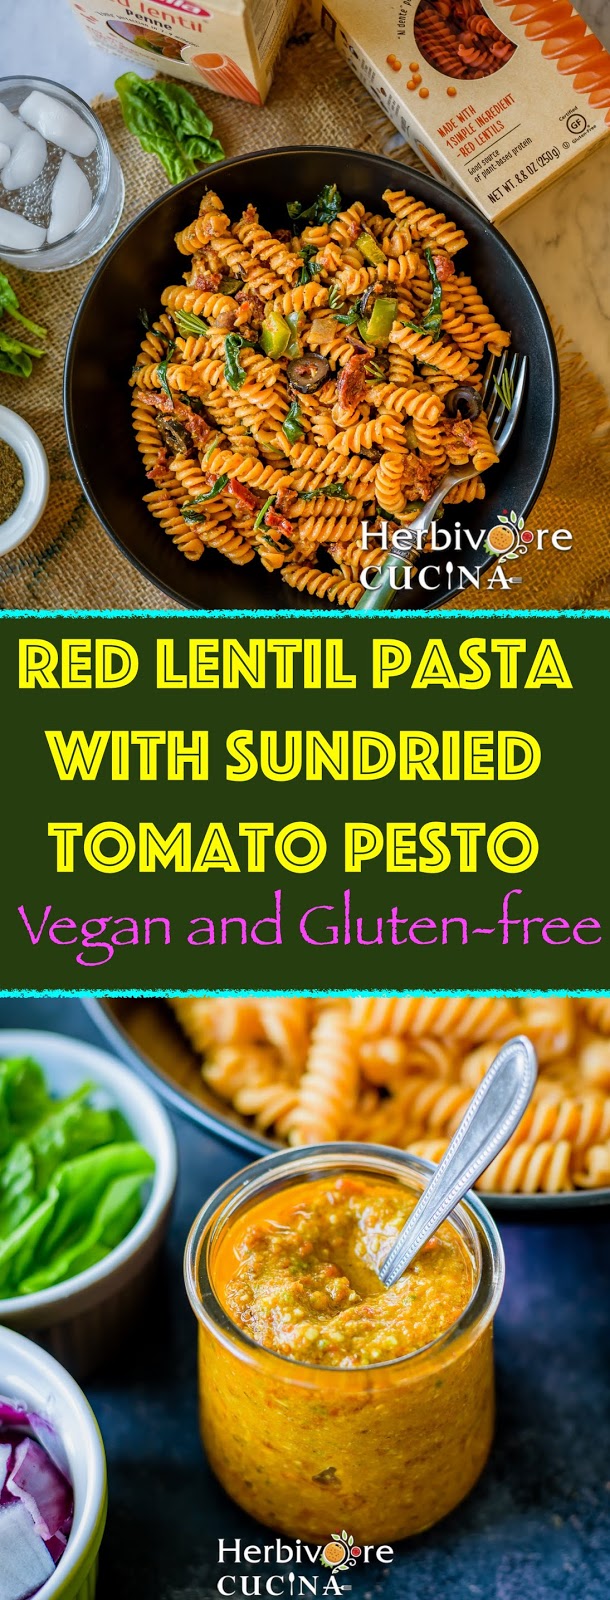 Red Lentil Pasta with Sundried Tomato Pesto